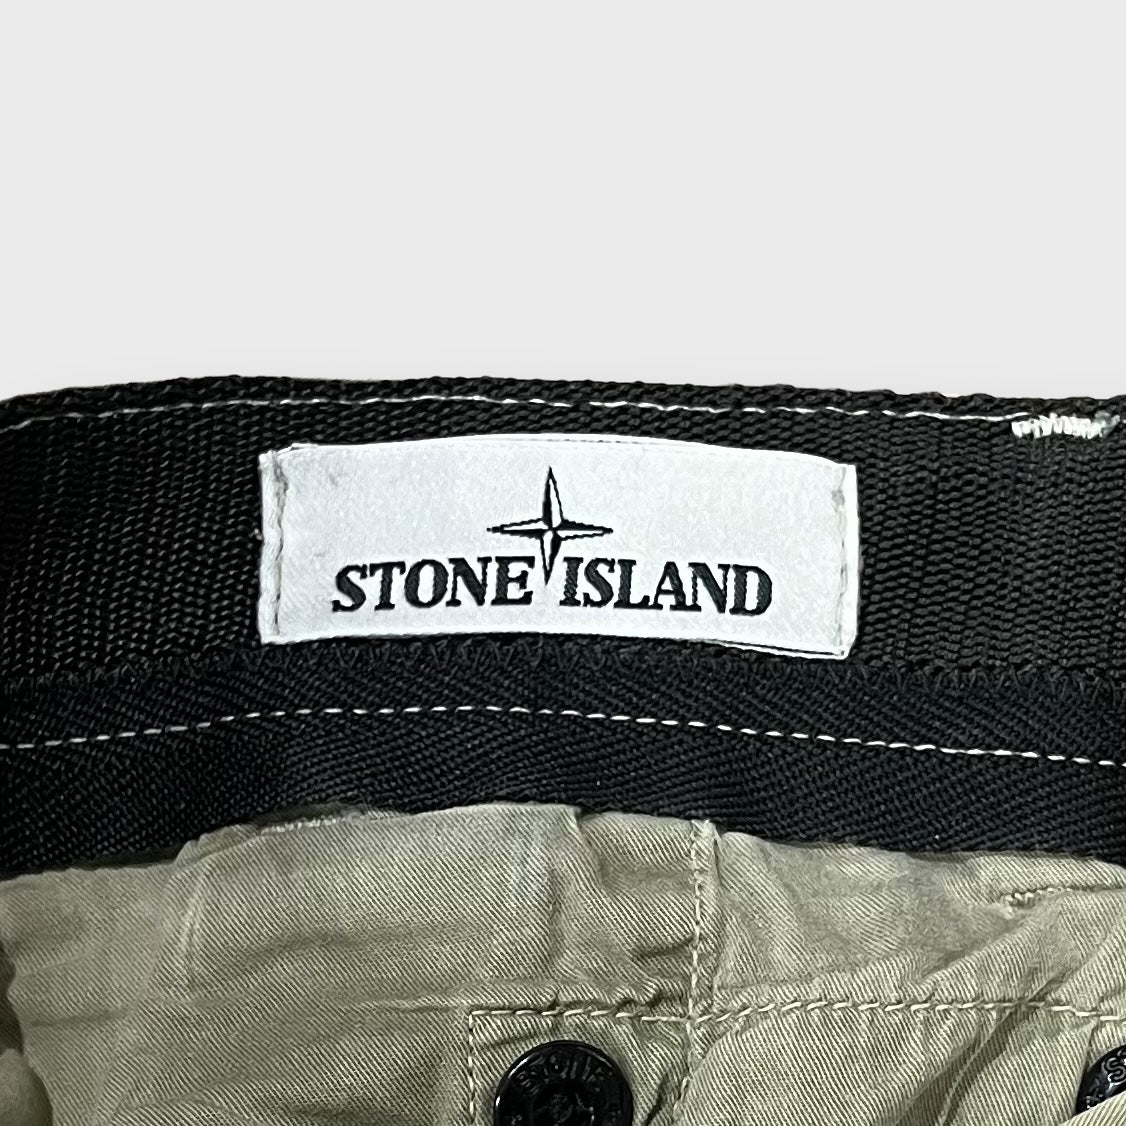 00’s “STONE ISLAND”
short cargo pants